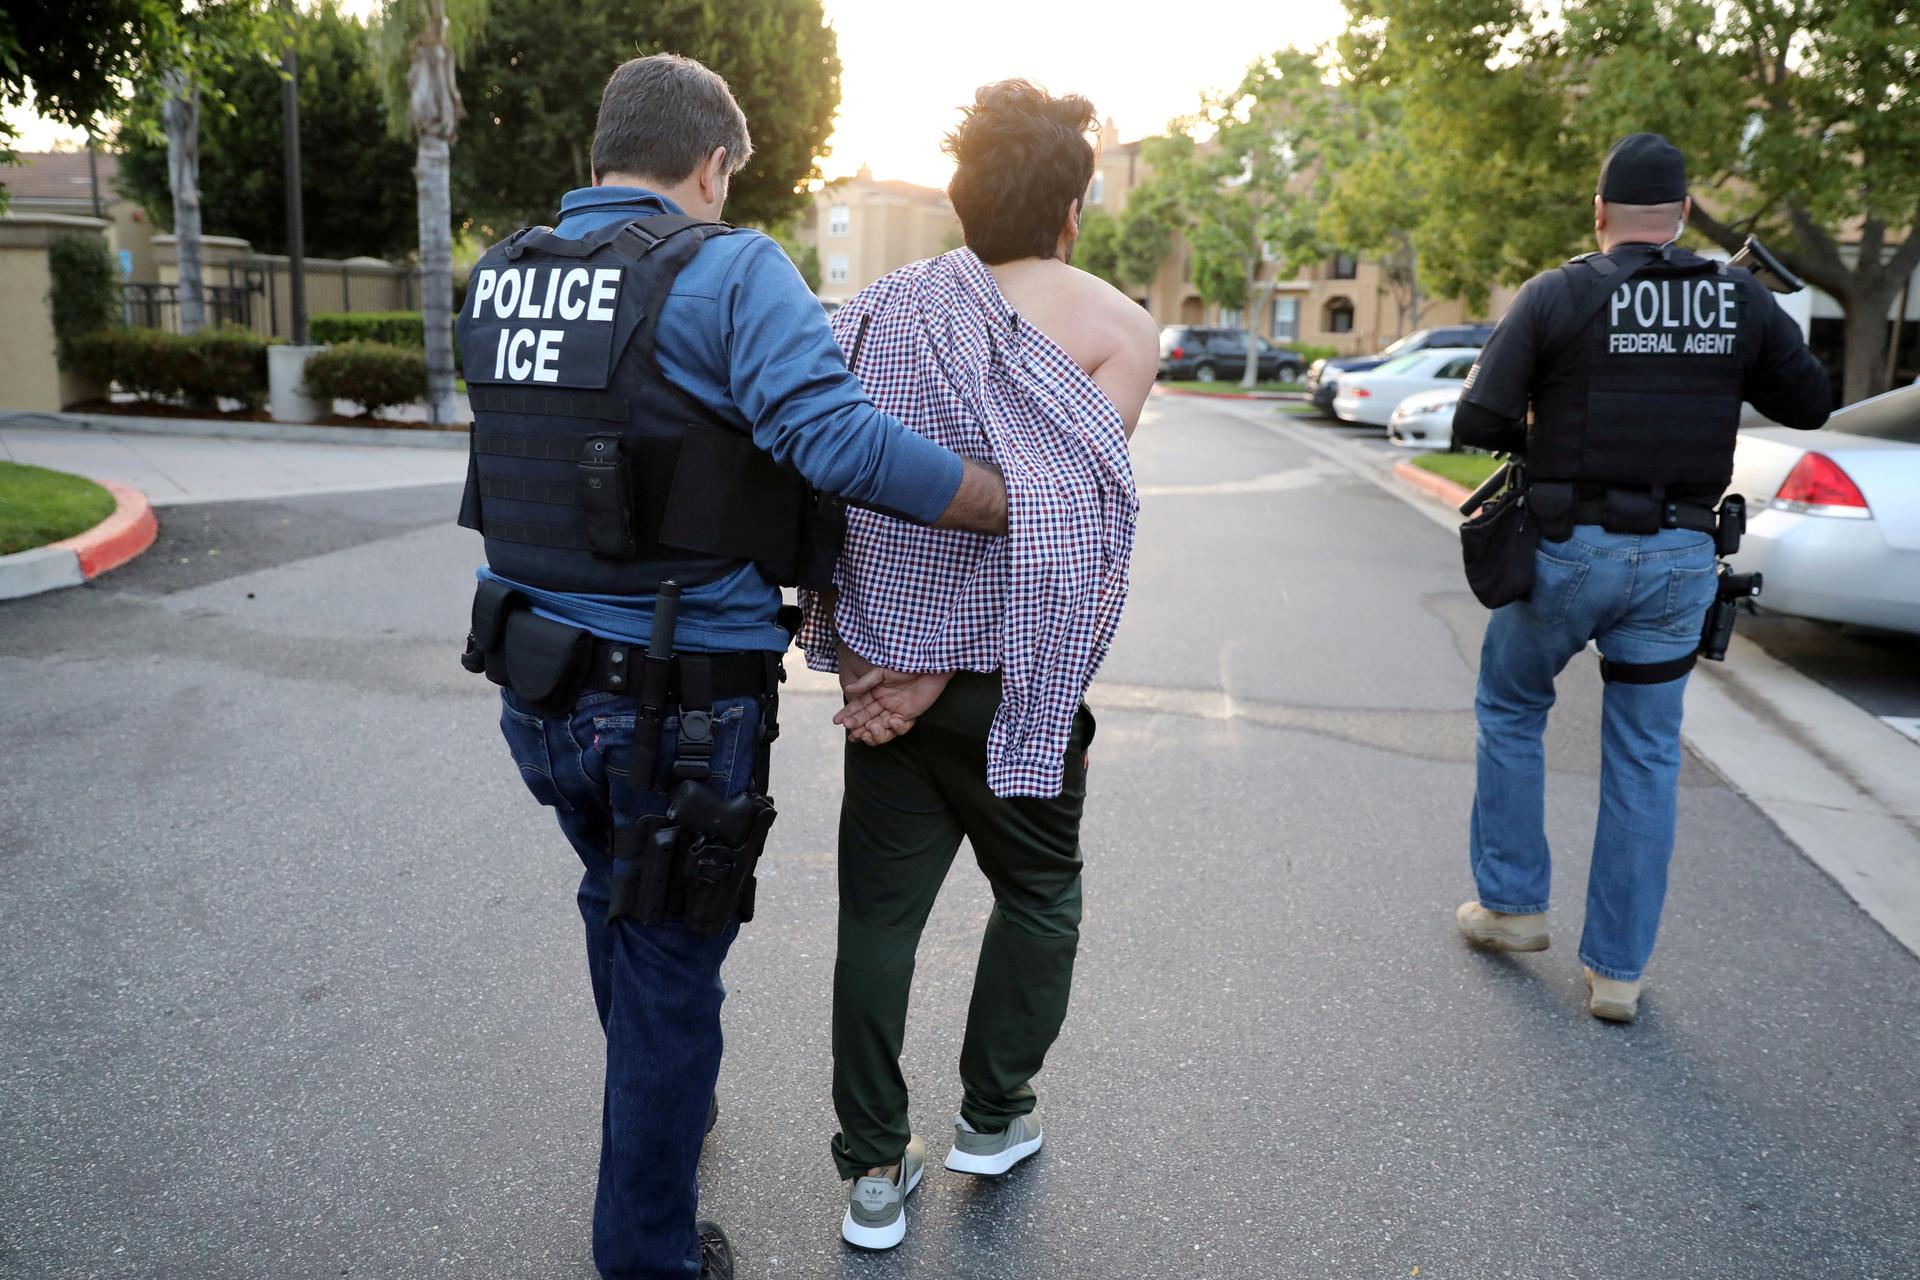 Is e police. "Immigration and Customs Enforcement"+Enforcement. Иммиграционная полиция. Иммиграционная полиция США. Иммиграционная и таможенная полиция США.